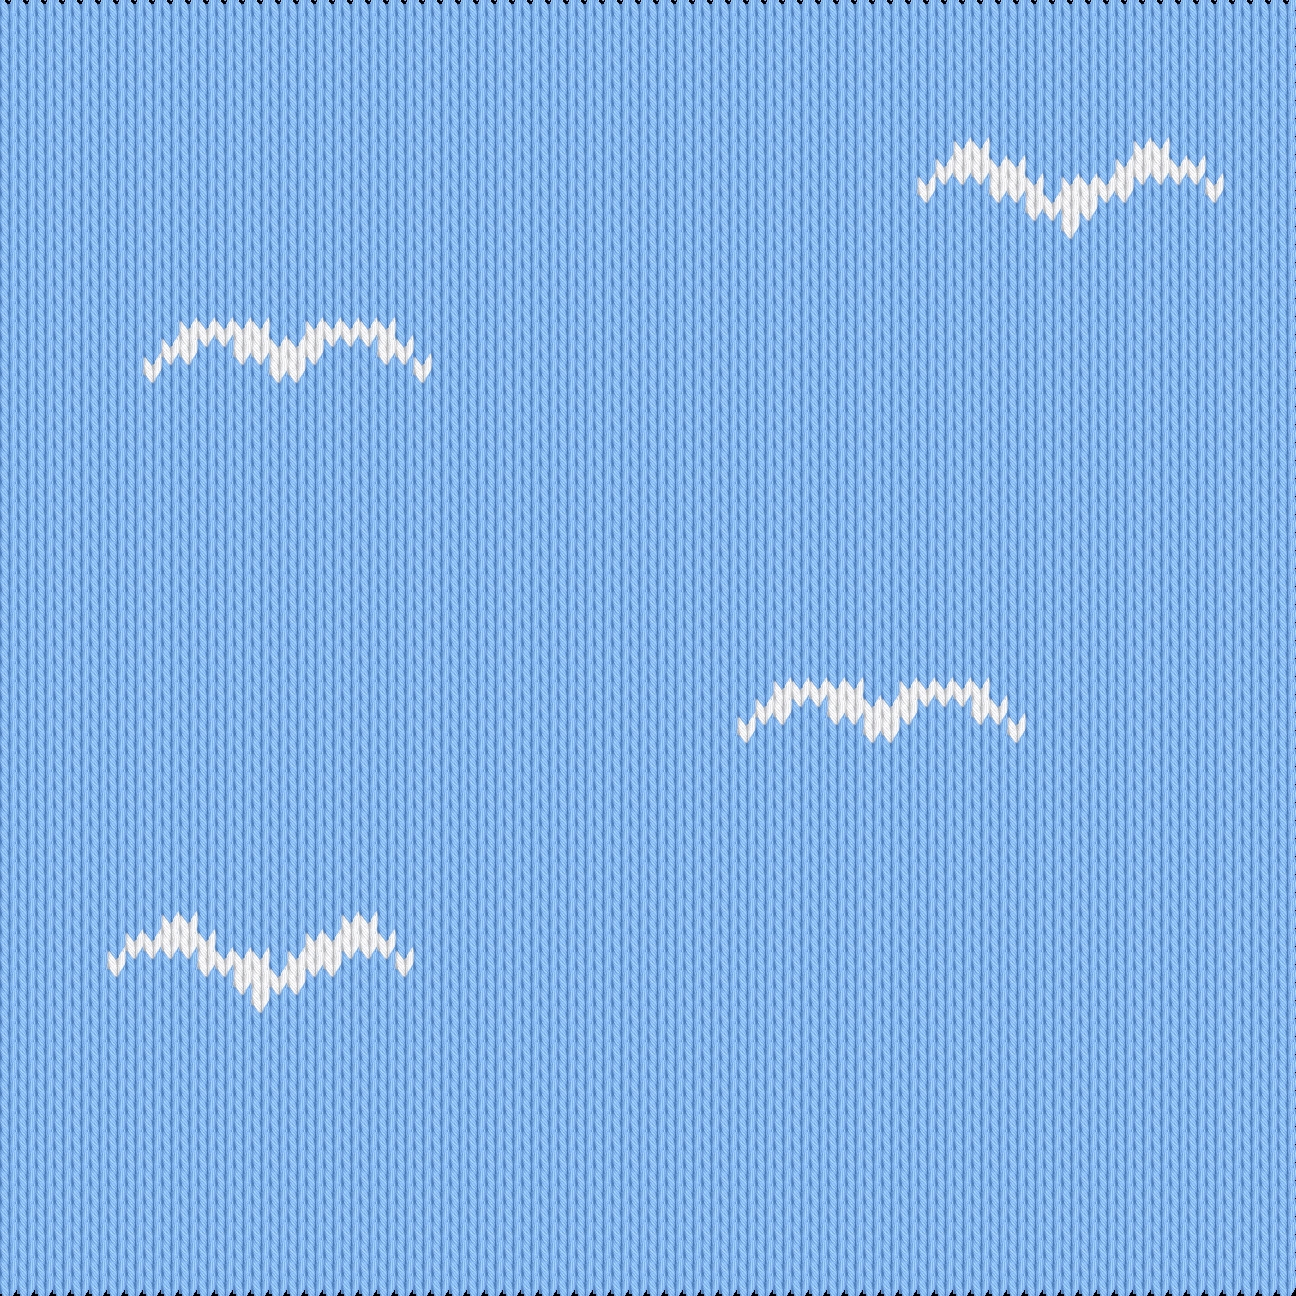 Knitting motif chart, seagulls